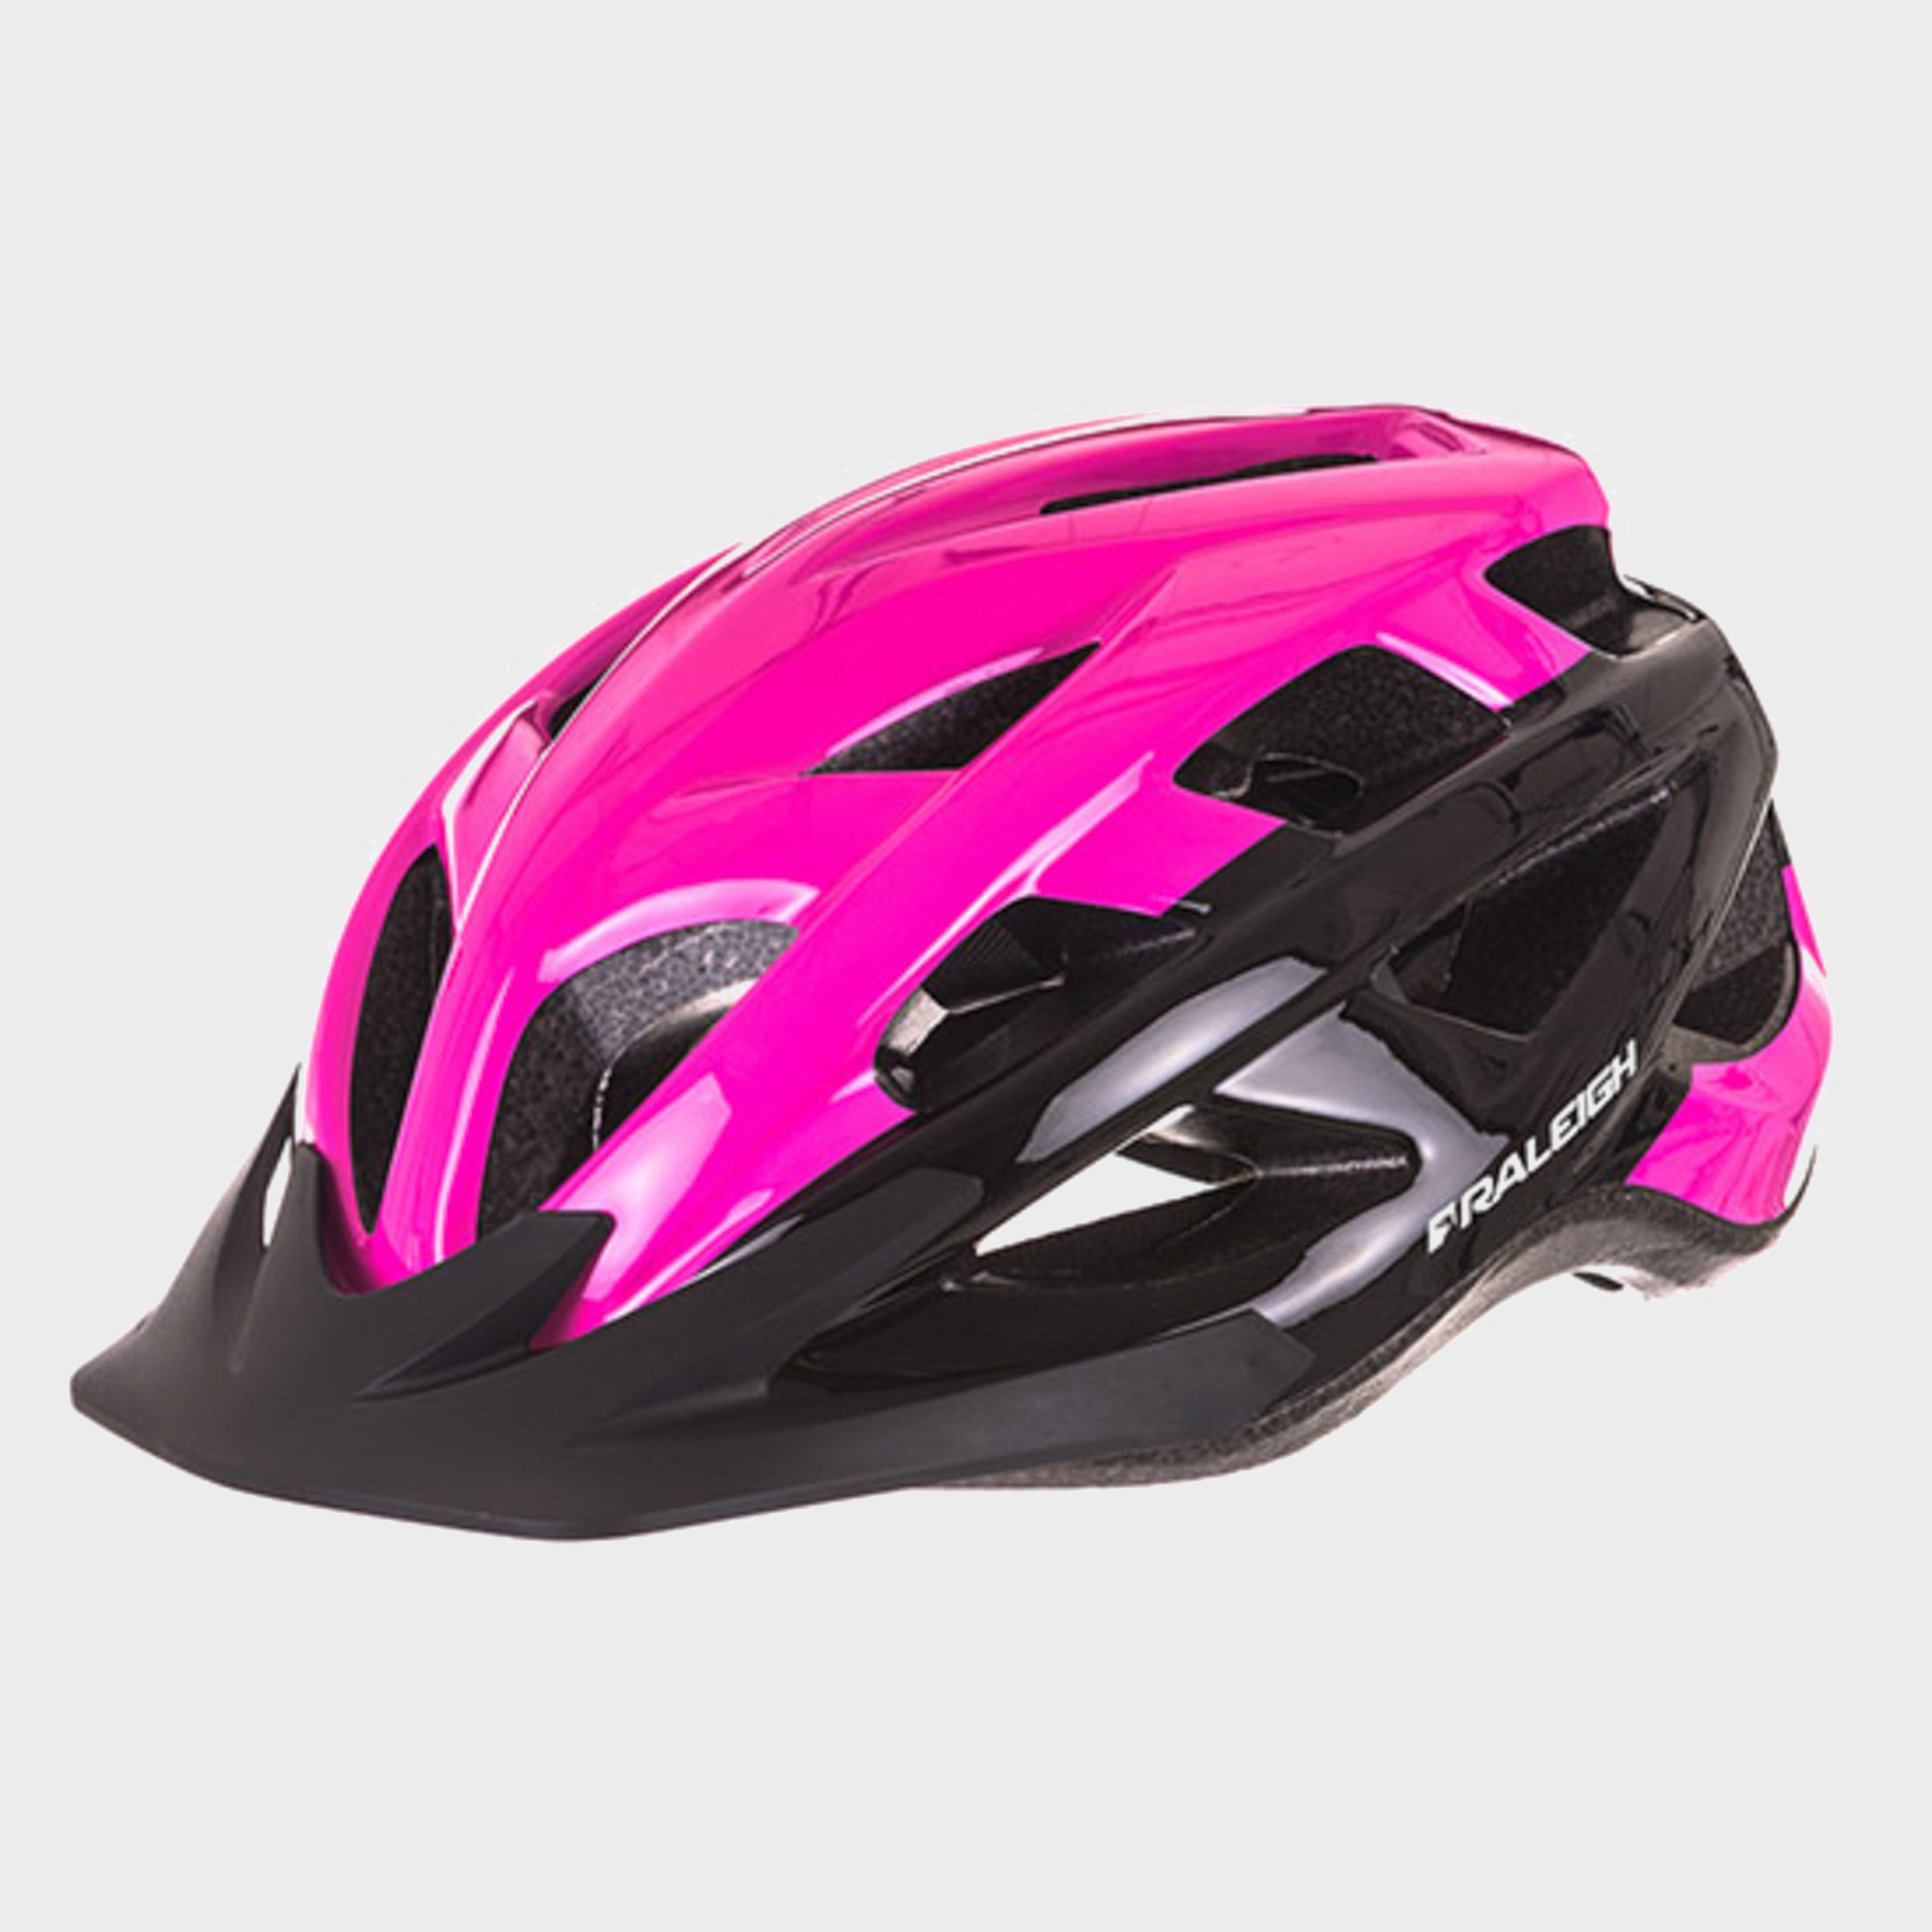 Blacks Raleigh Quest Cycling Helmet, Pink